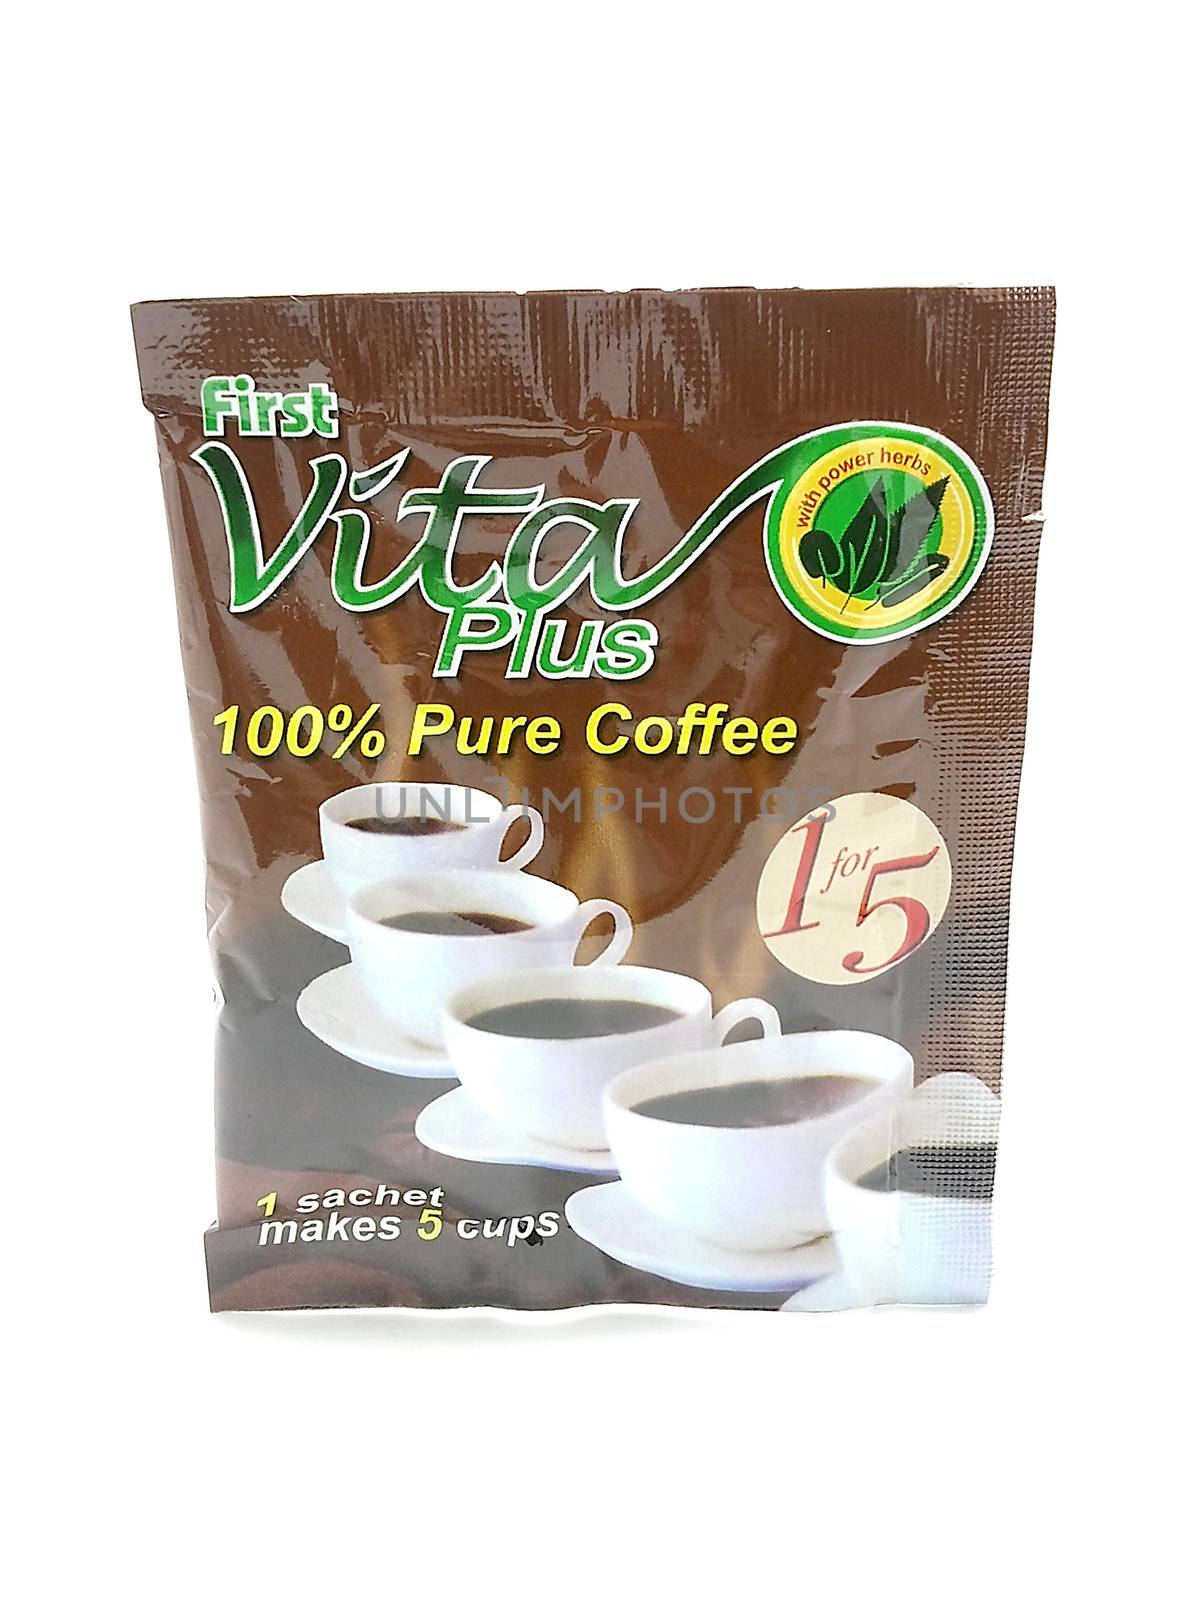 MANILA, PH - JUNE 23 - First vita plus coffee sachet on June 23, 2020 in Manila, Philippines.